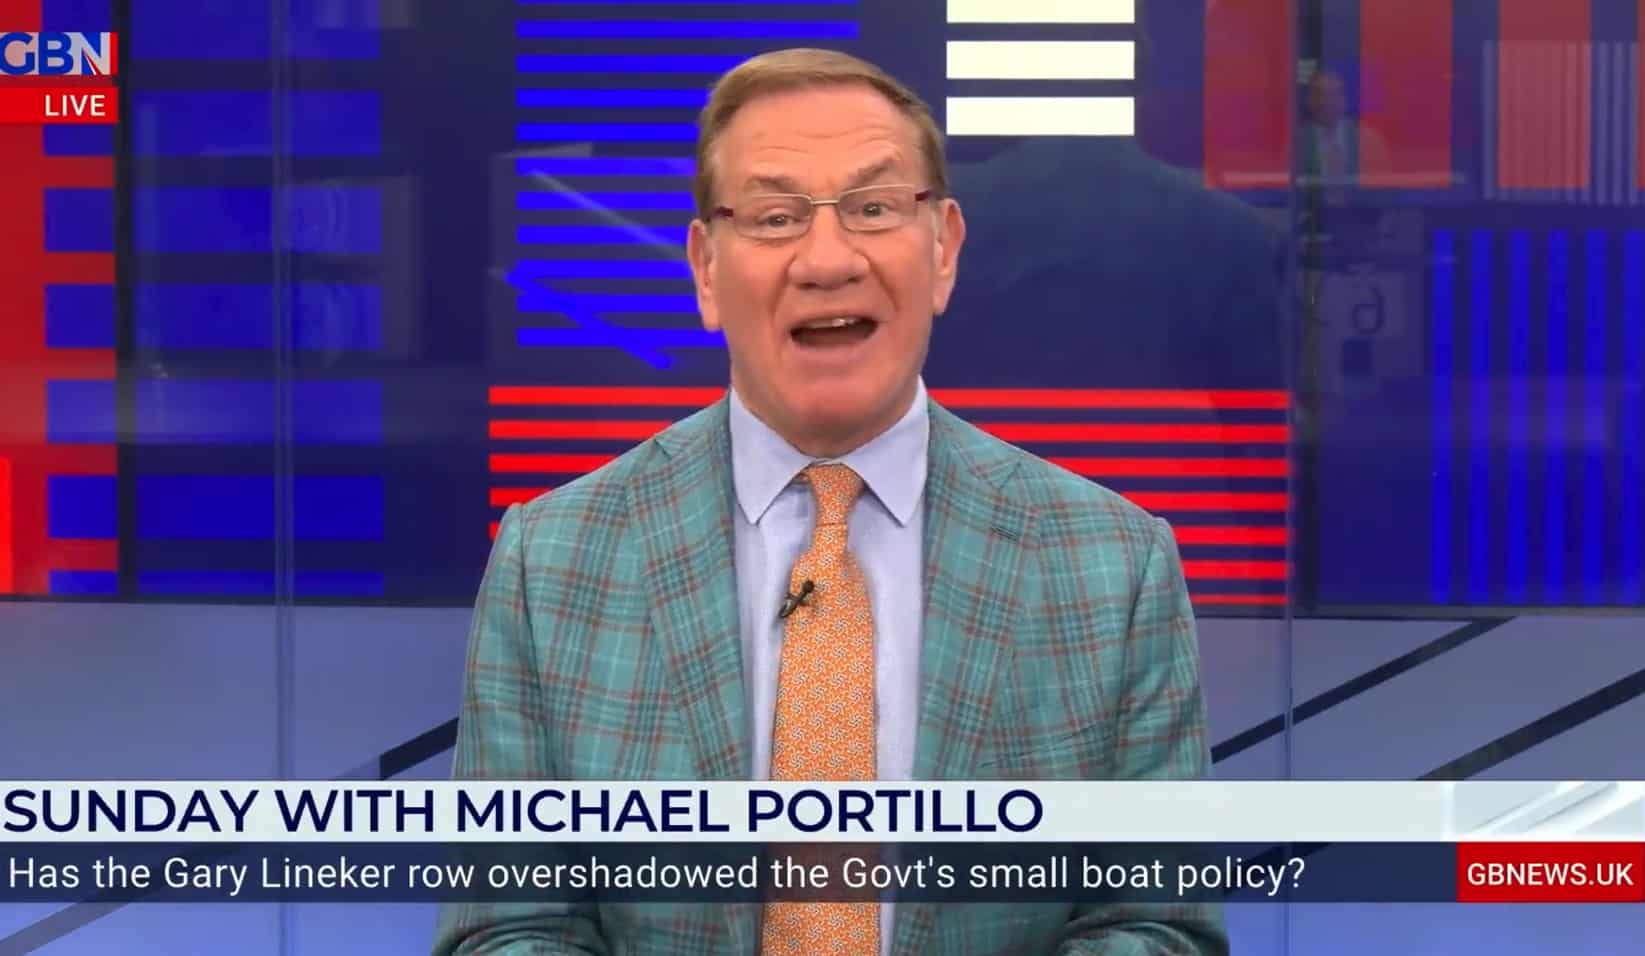 Michael Portillo uses new GB News show to criticise fellow BBC presenter Gary Lineker